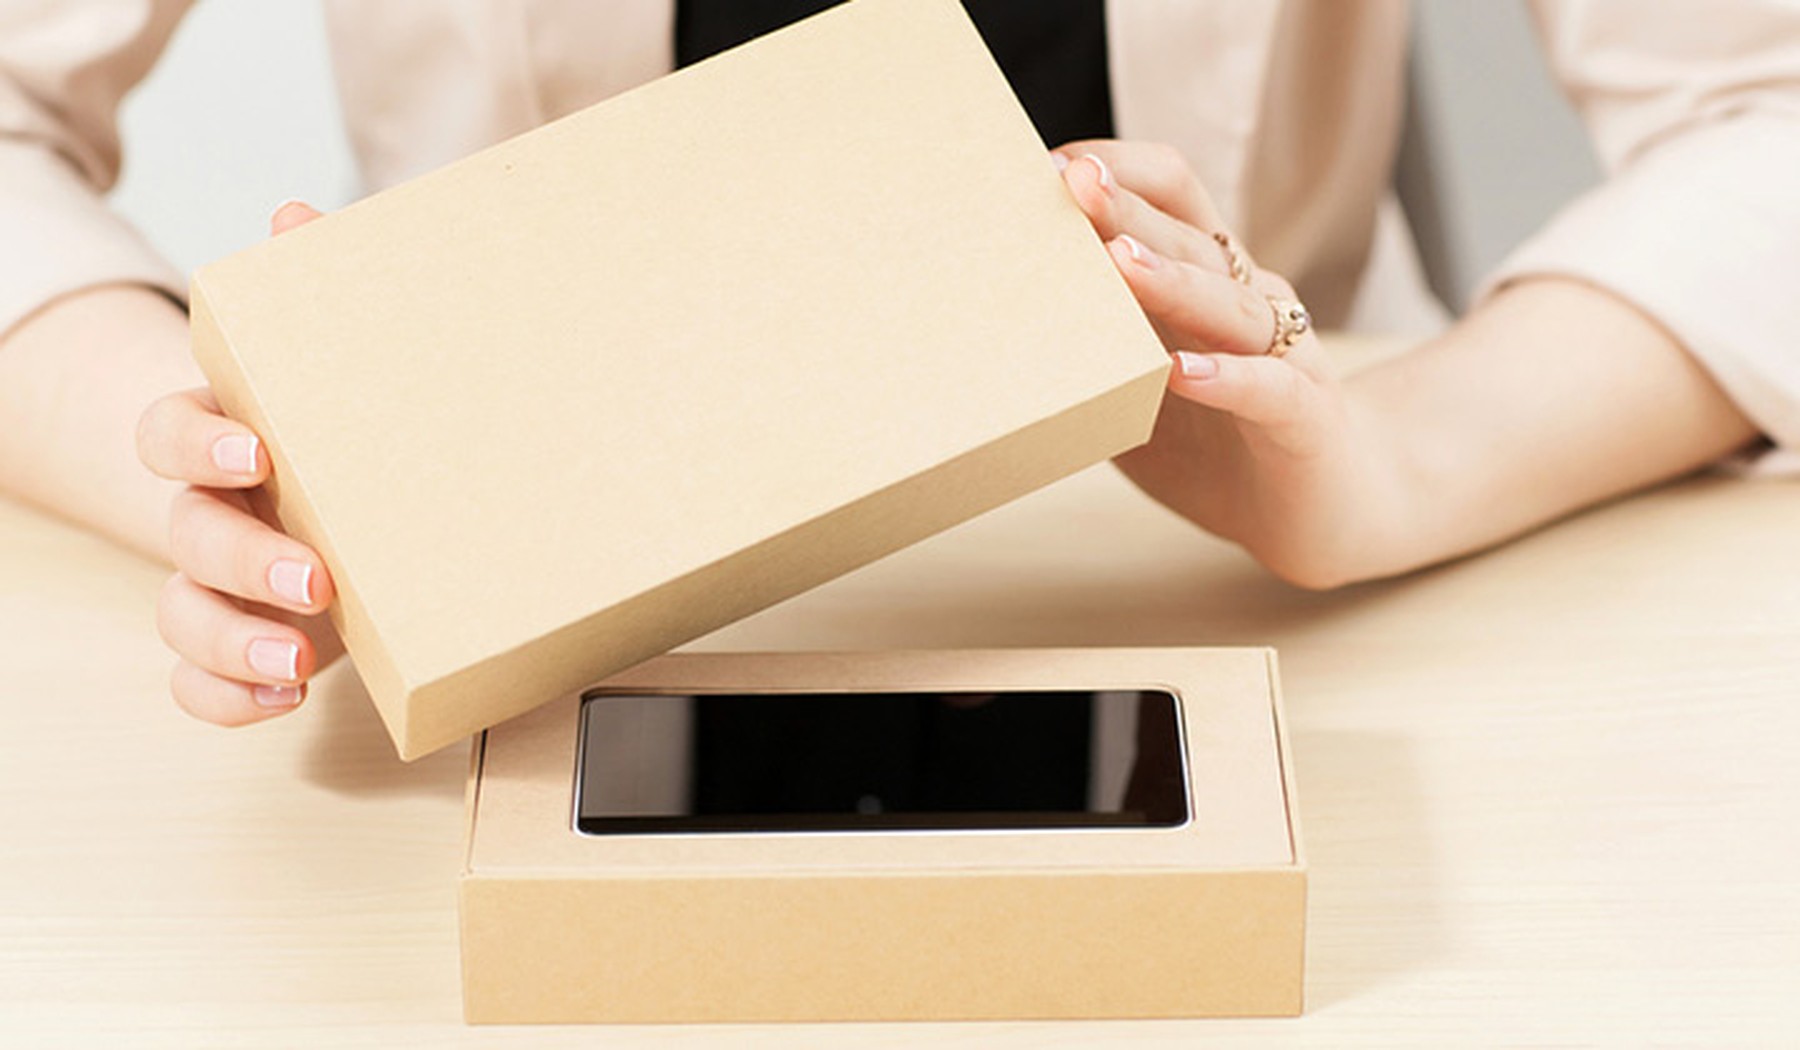 Mujer destapando una caja beige con un smartphone nuevo dentro